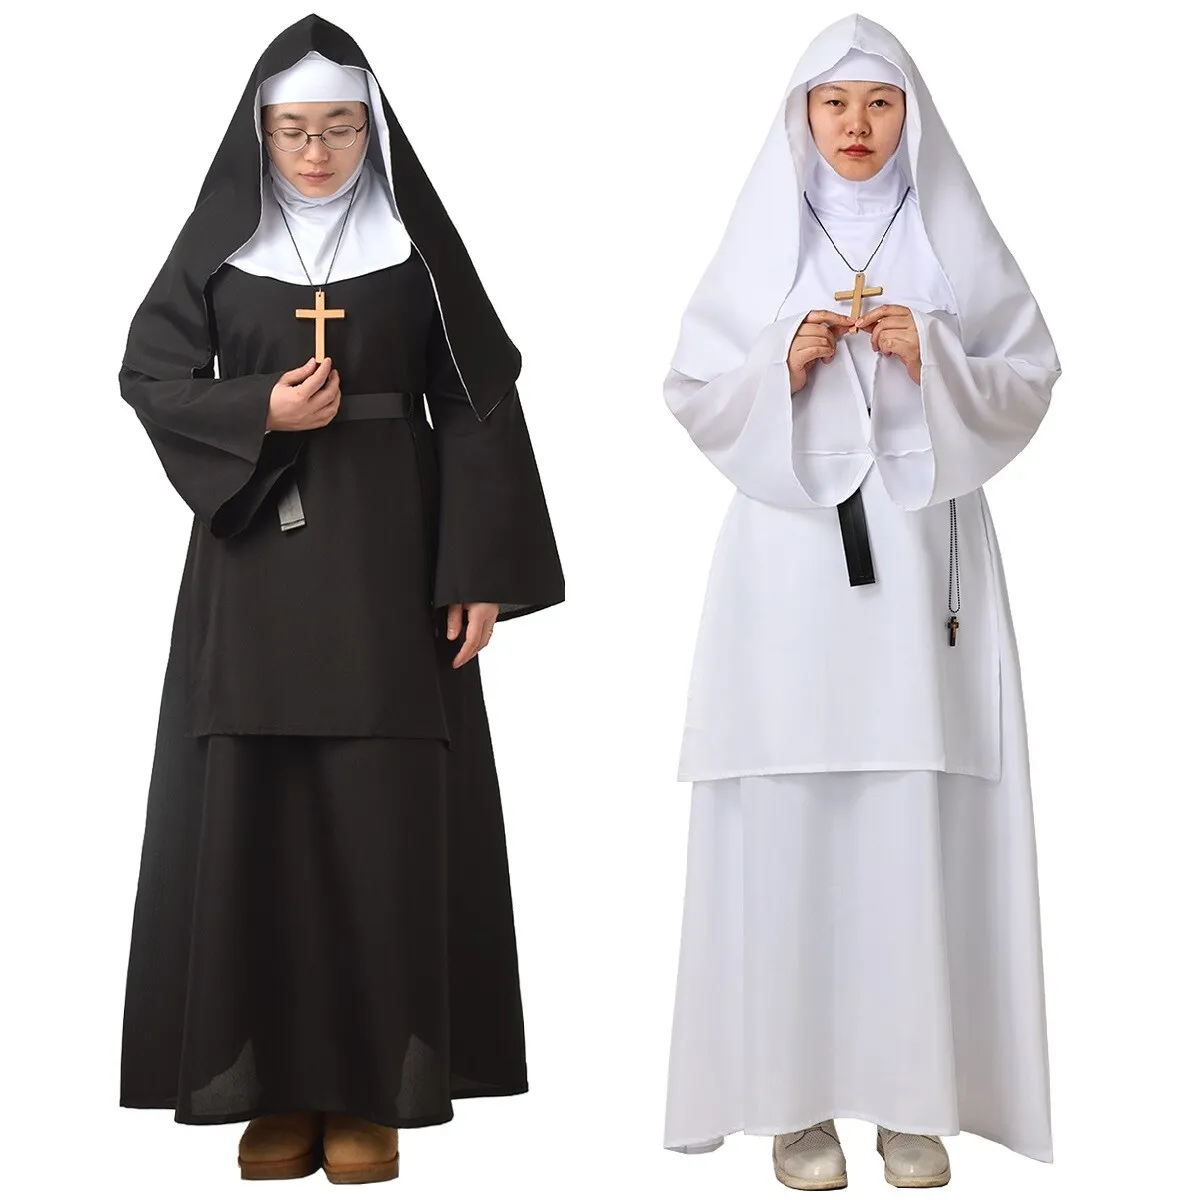 dress of a nun